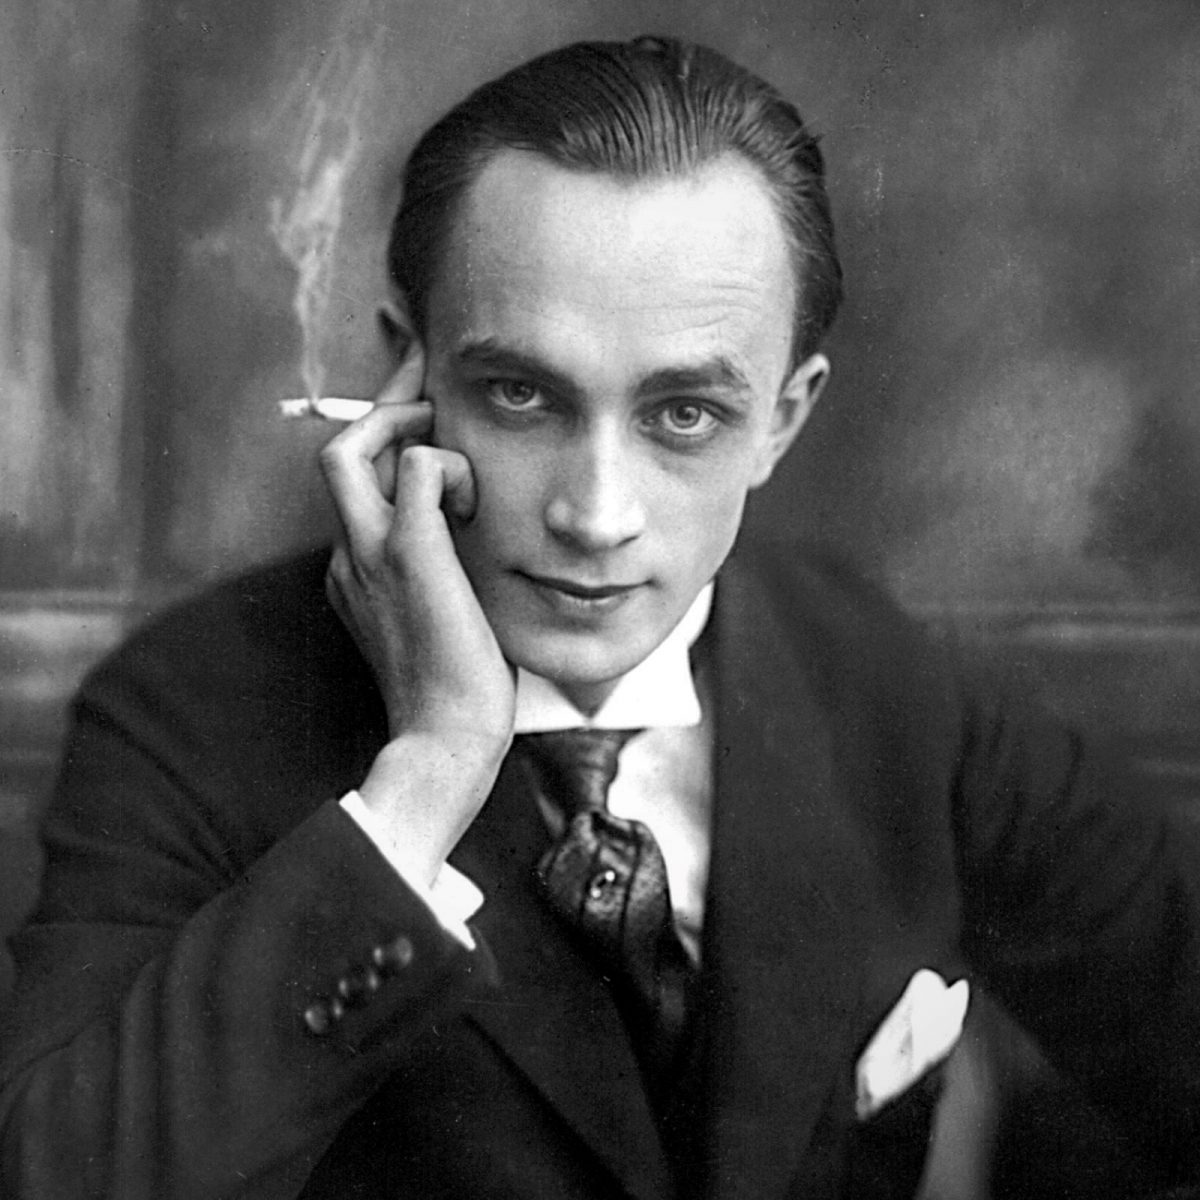 Conrad veidt, Germany, actors, 1920s, films, silent movies, movie stars, photography, Hollywood